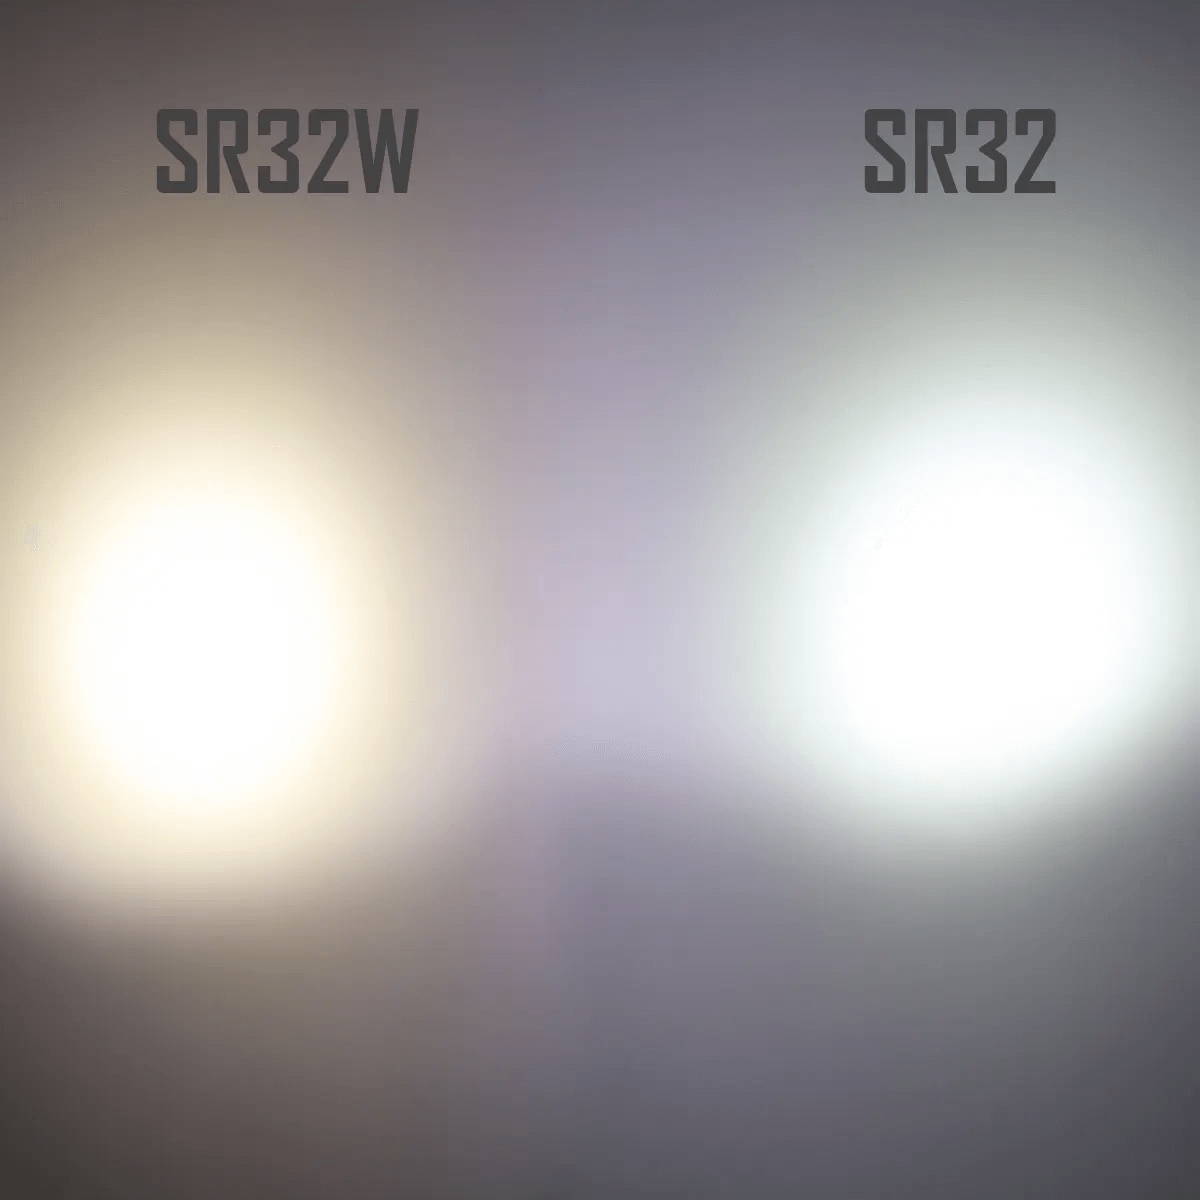  SR32 IMALENT  و SR32W